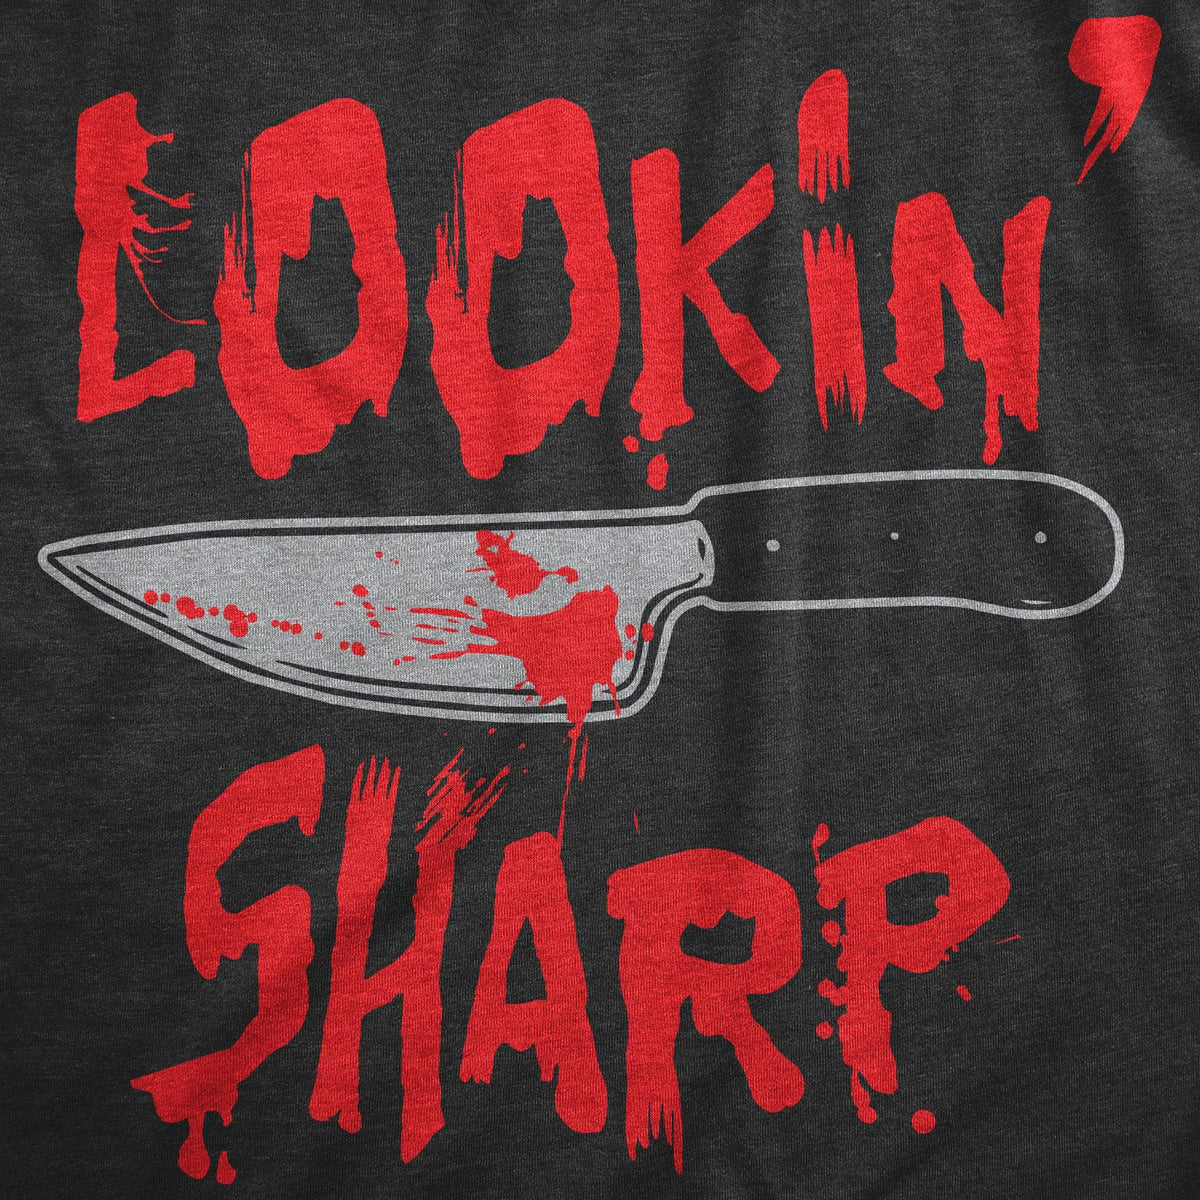 Lookin Sharp Women&#39;s Tshirt  -  Crazy Dog T-Shirts